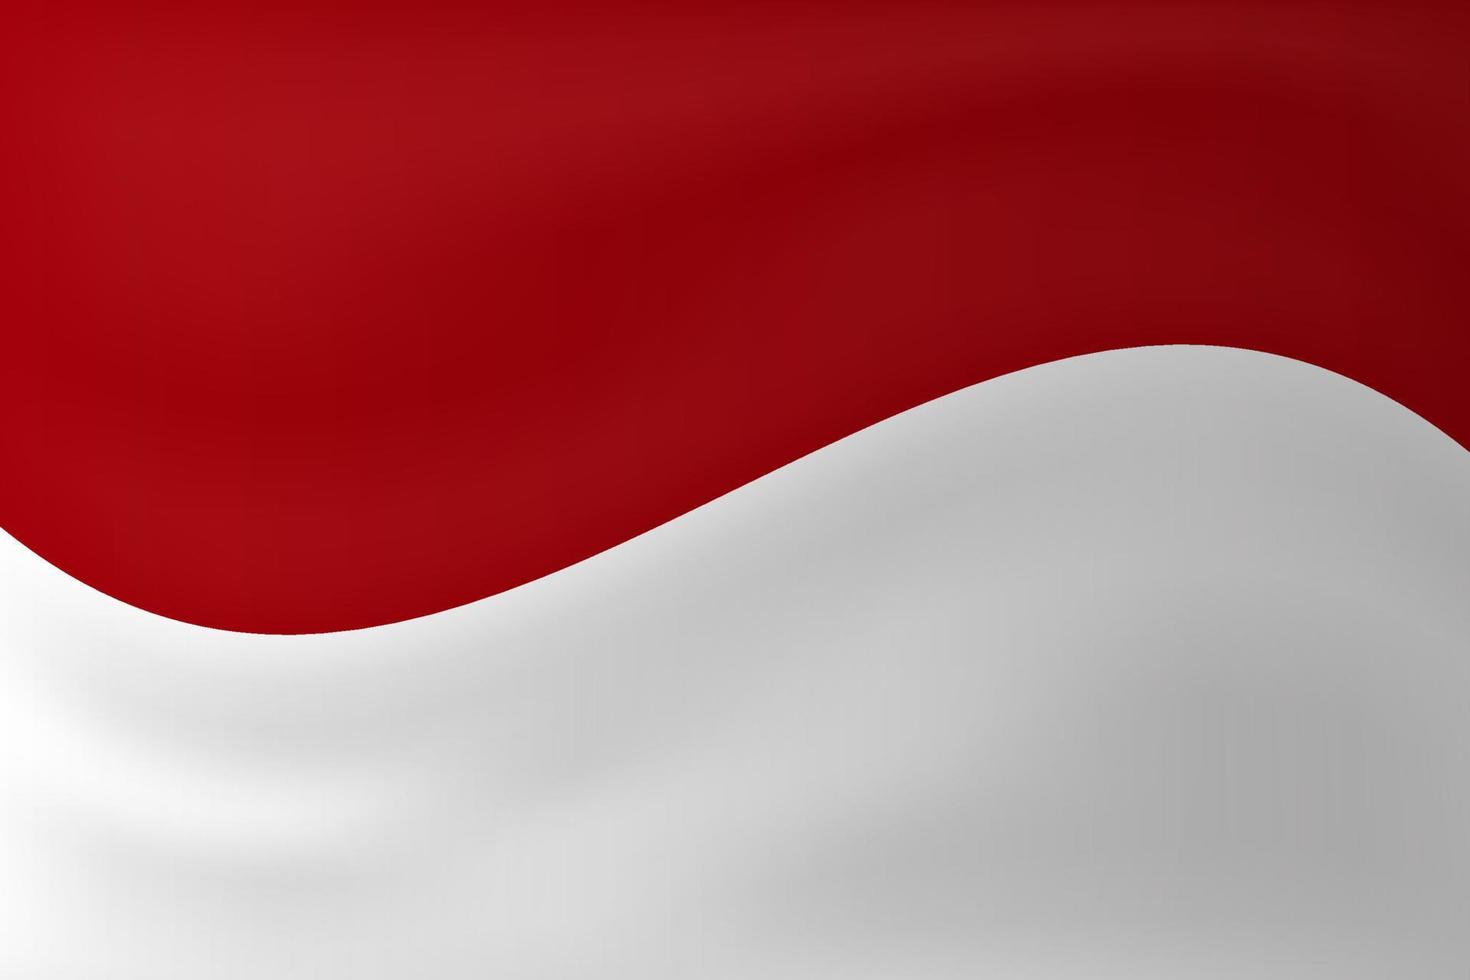 Golf illustratie Indonesië vlag achtergrond ontwerp vector voor achtergrond